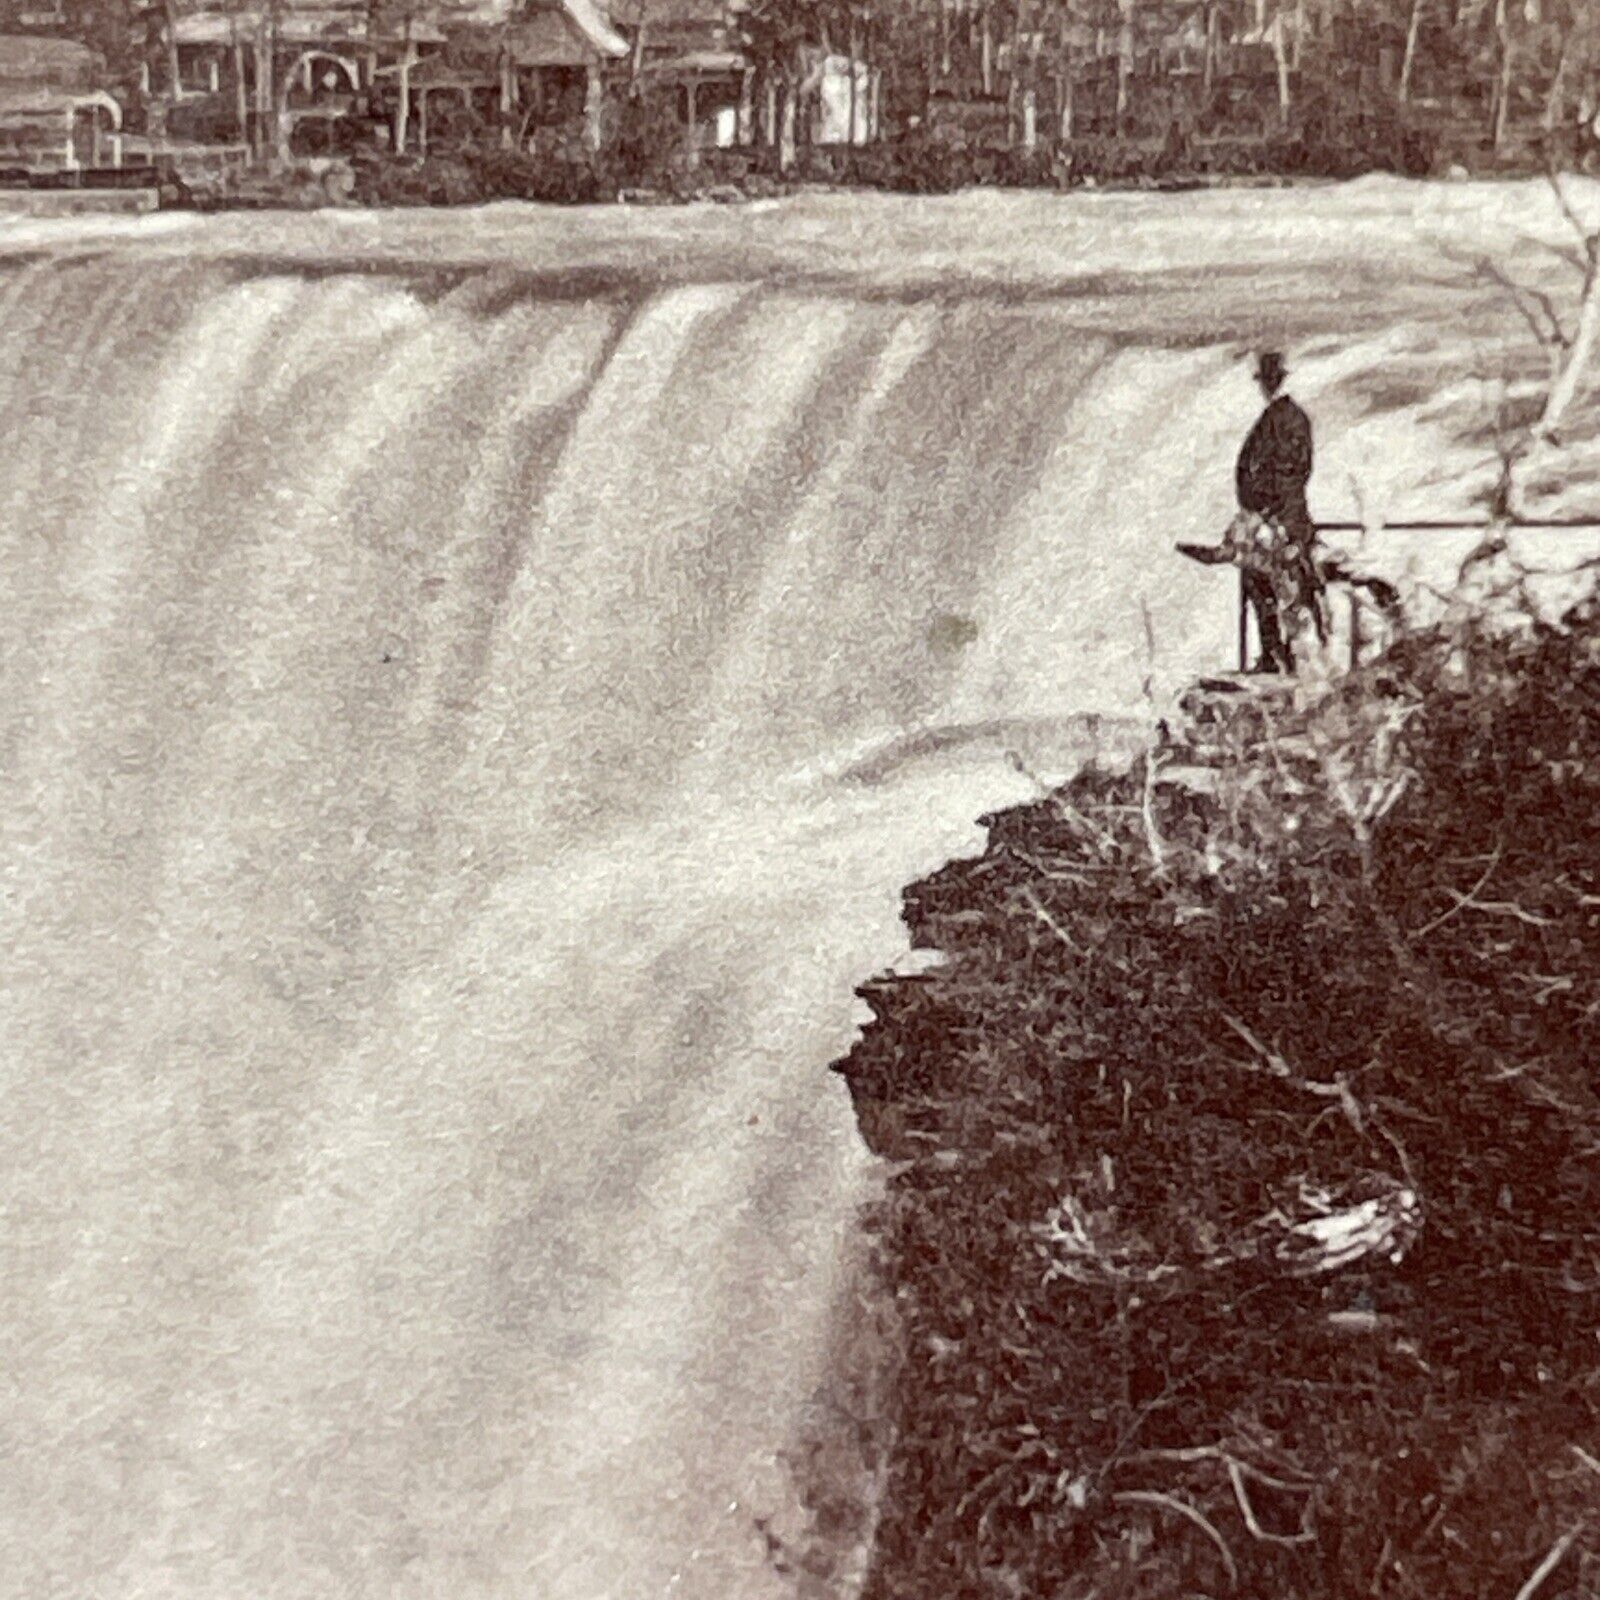 Antique 1860s Daredevil Standing Edge Niagara Falls Stereoview Photo Card V1855